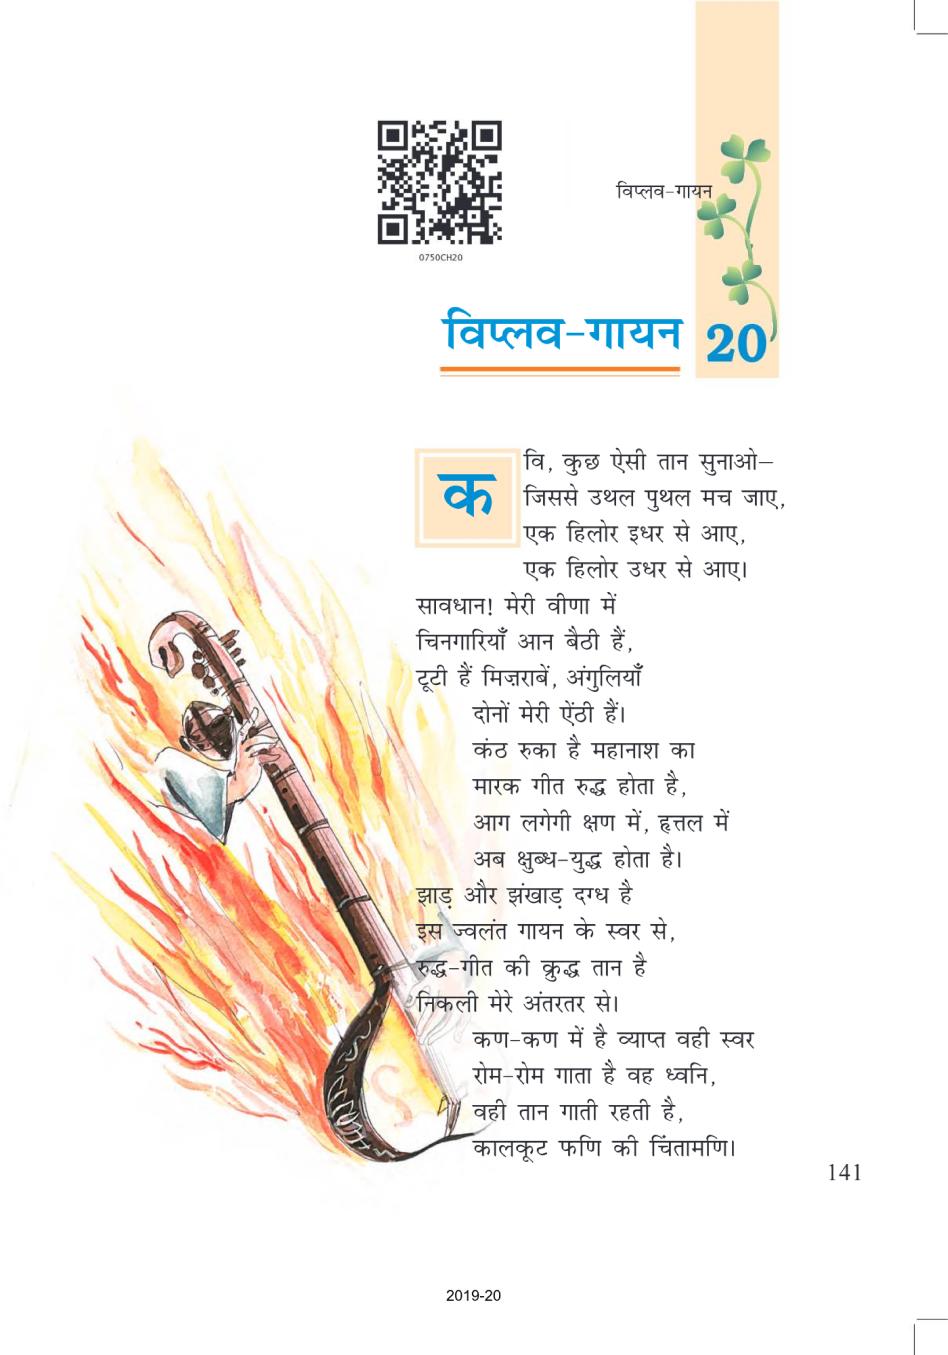 NCERT Book Class 7 Hindi (वसंत) Chapter 20 विप्लव -गायन - Page 1